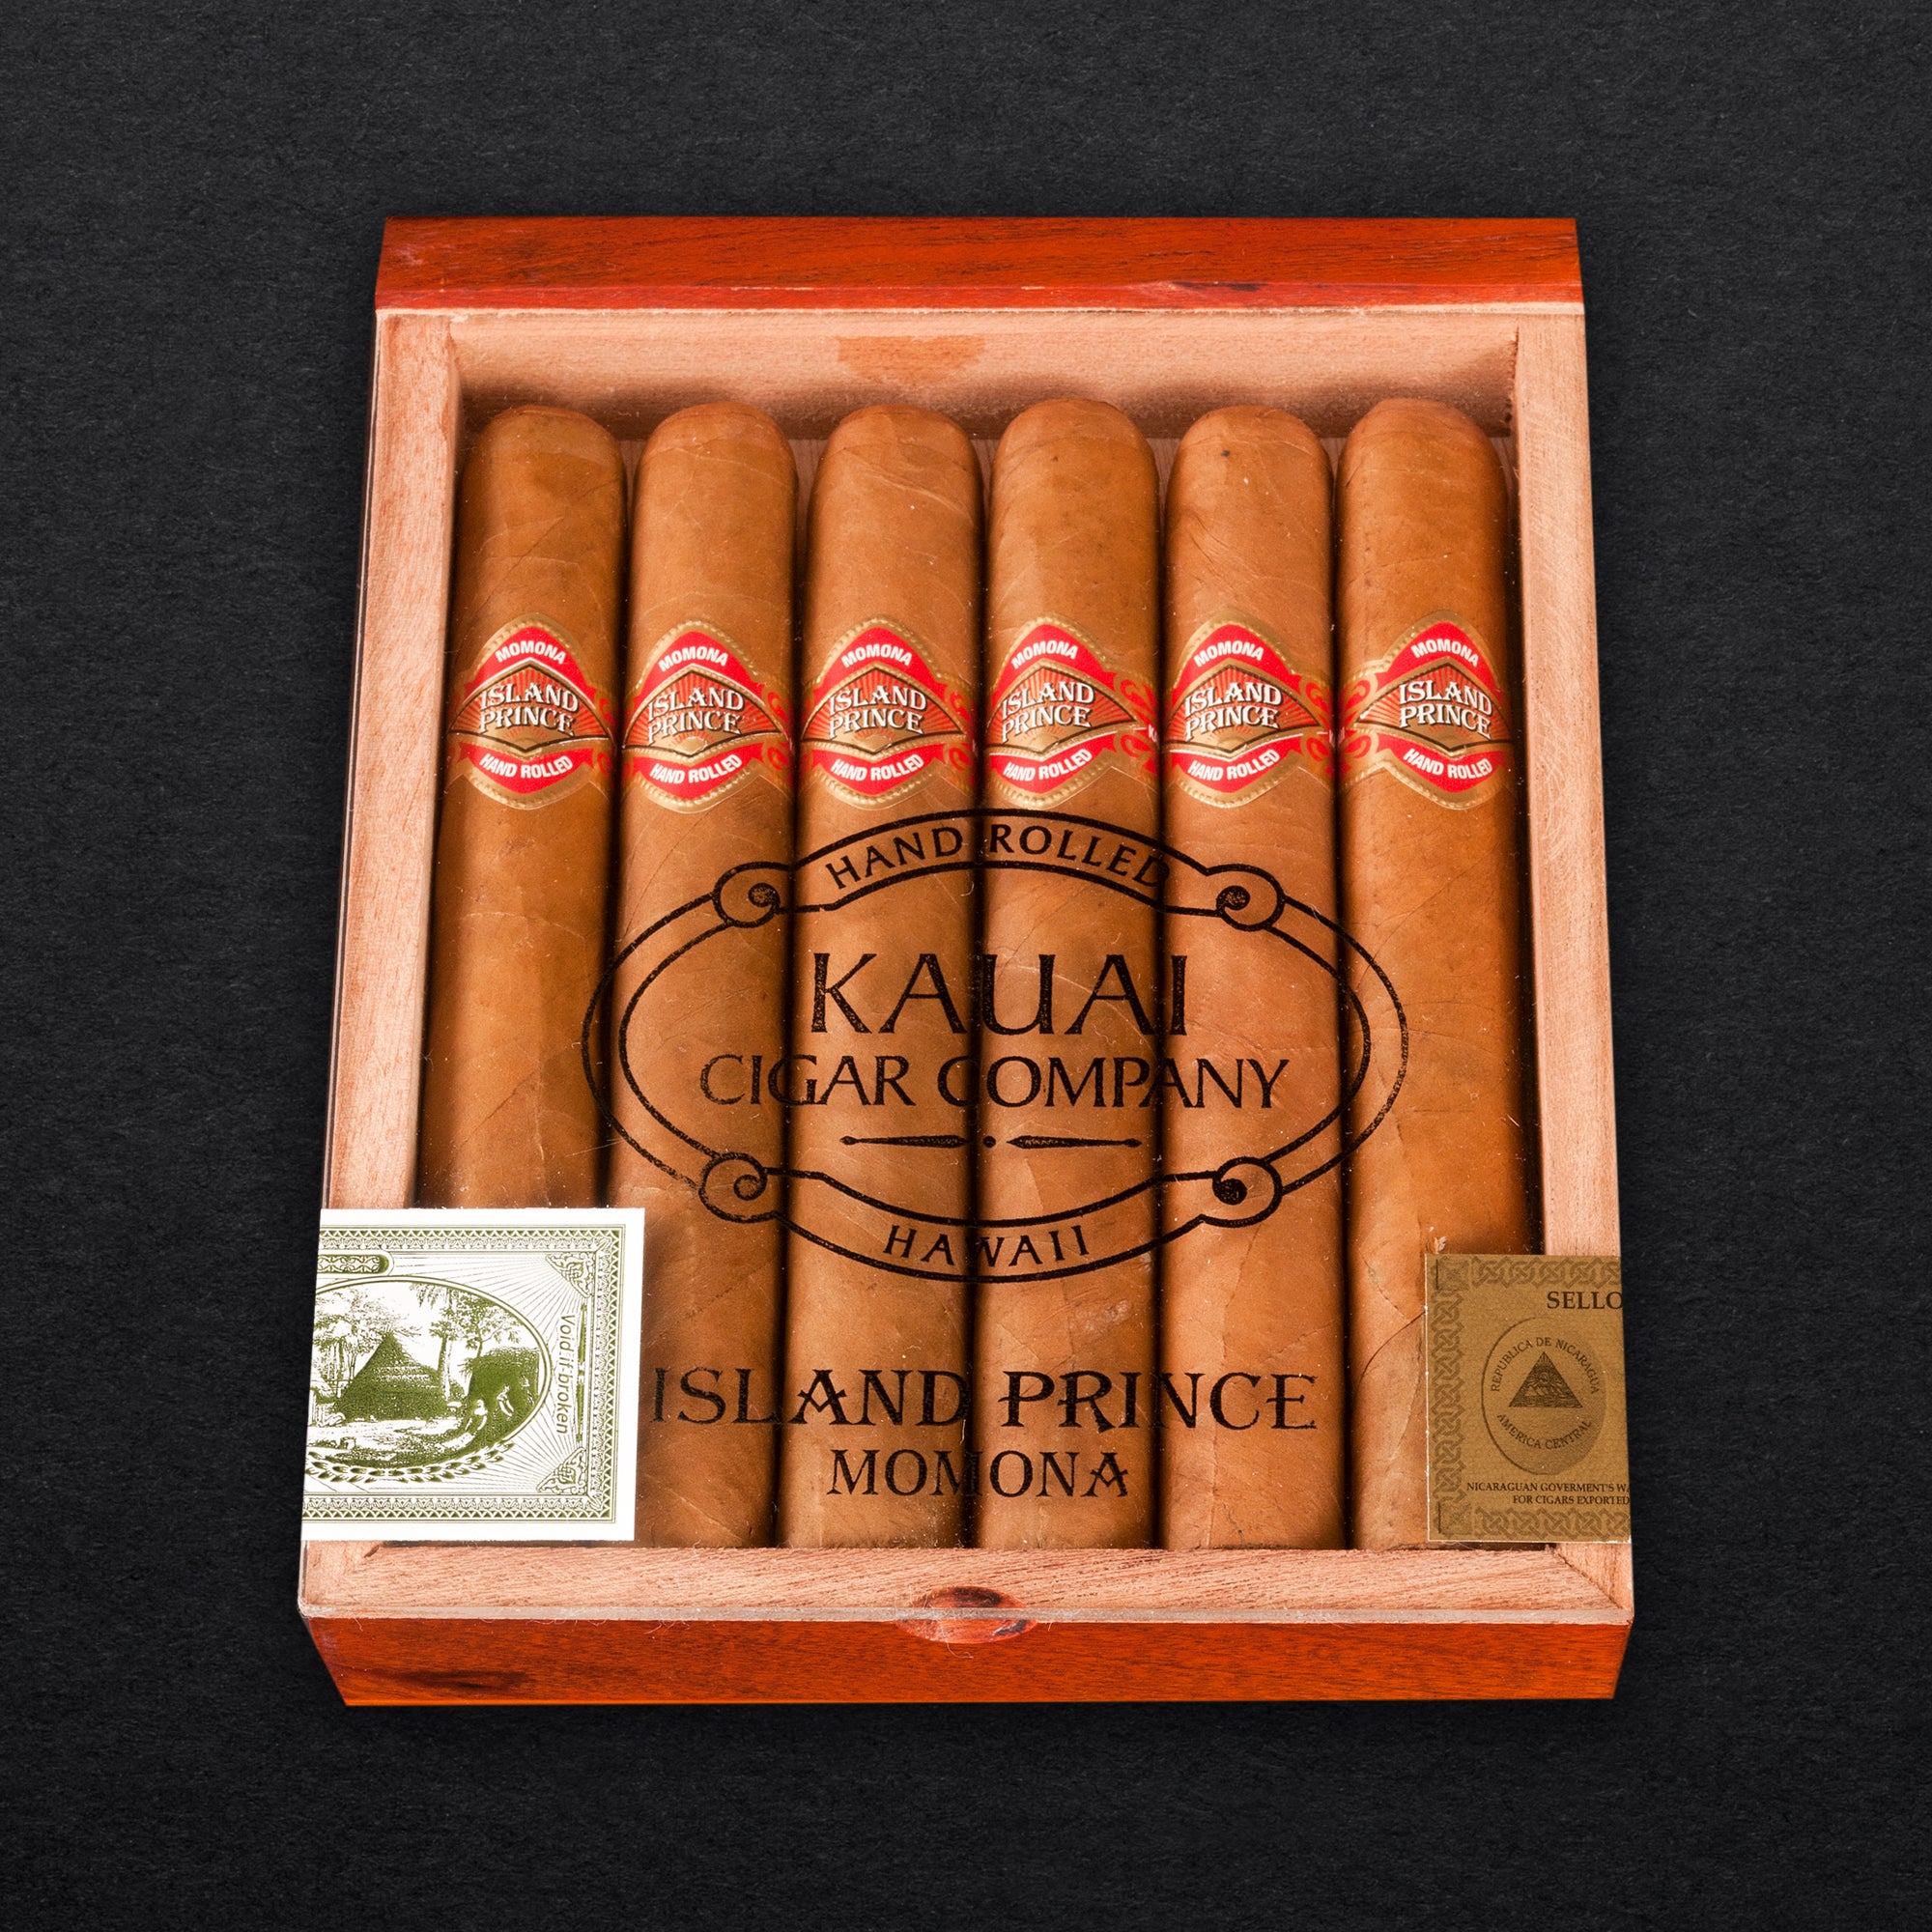 Island Prince Momona Cigars 6ct. Box